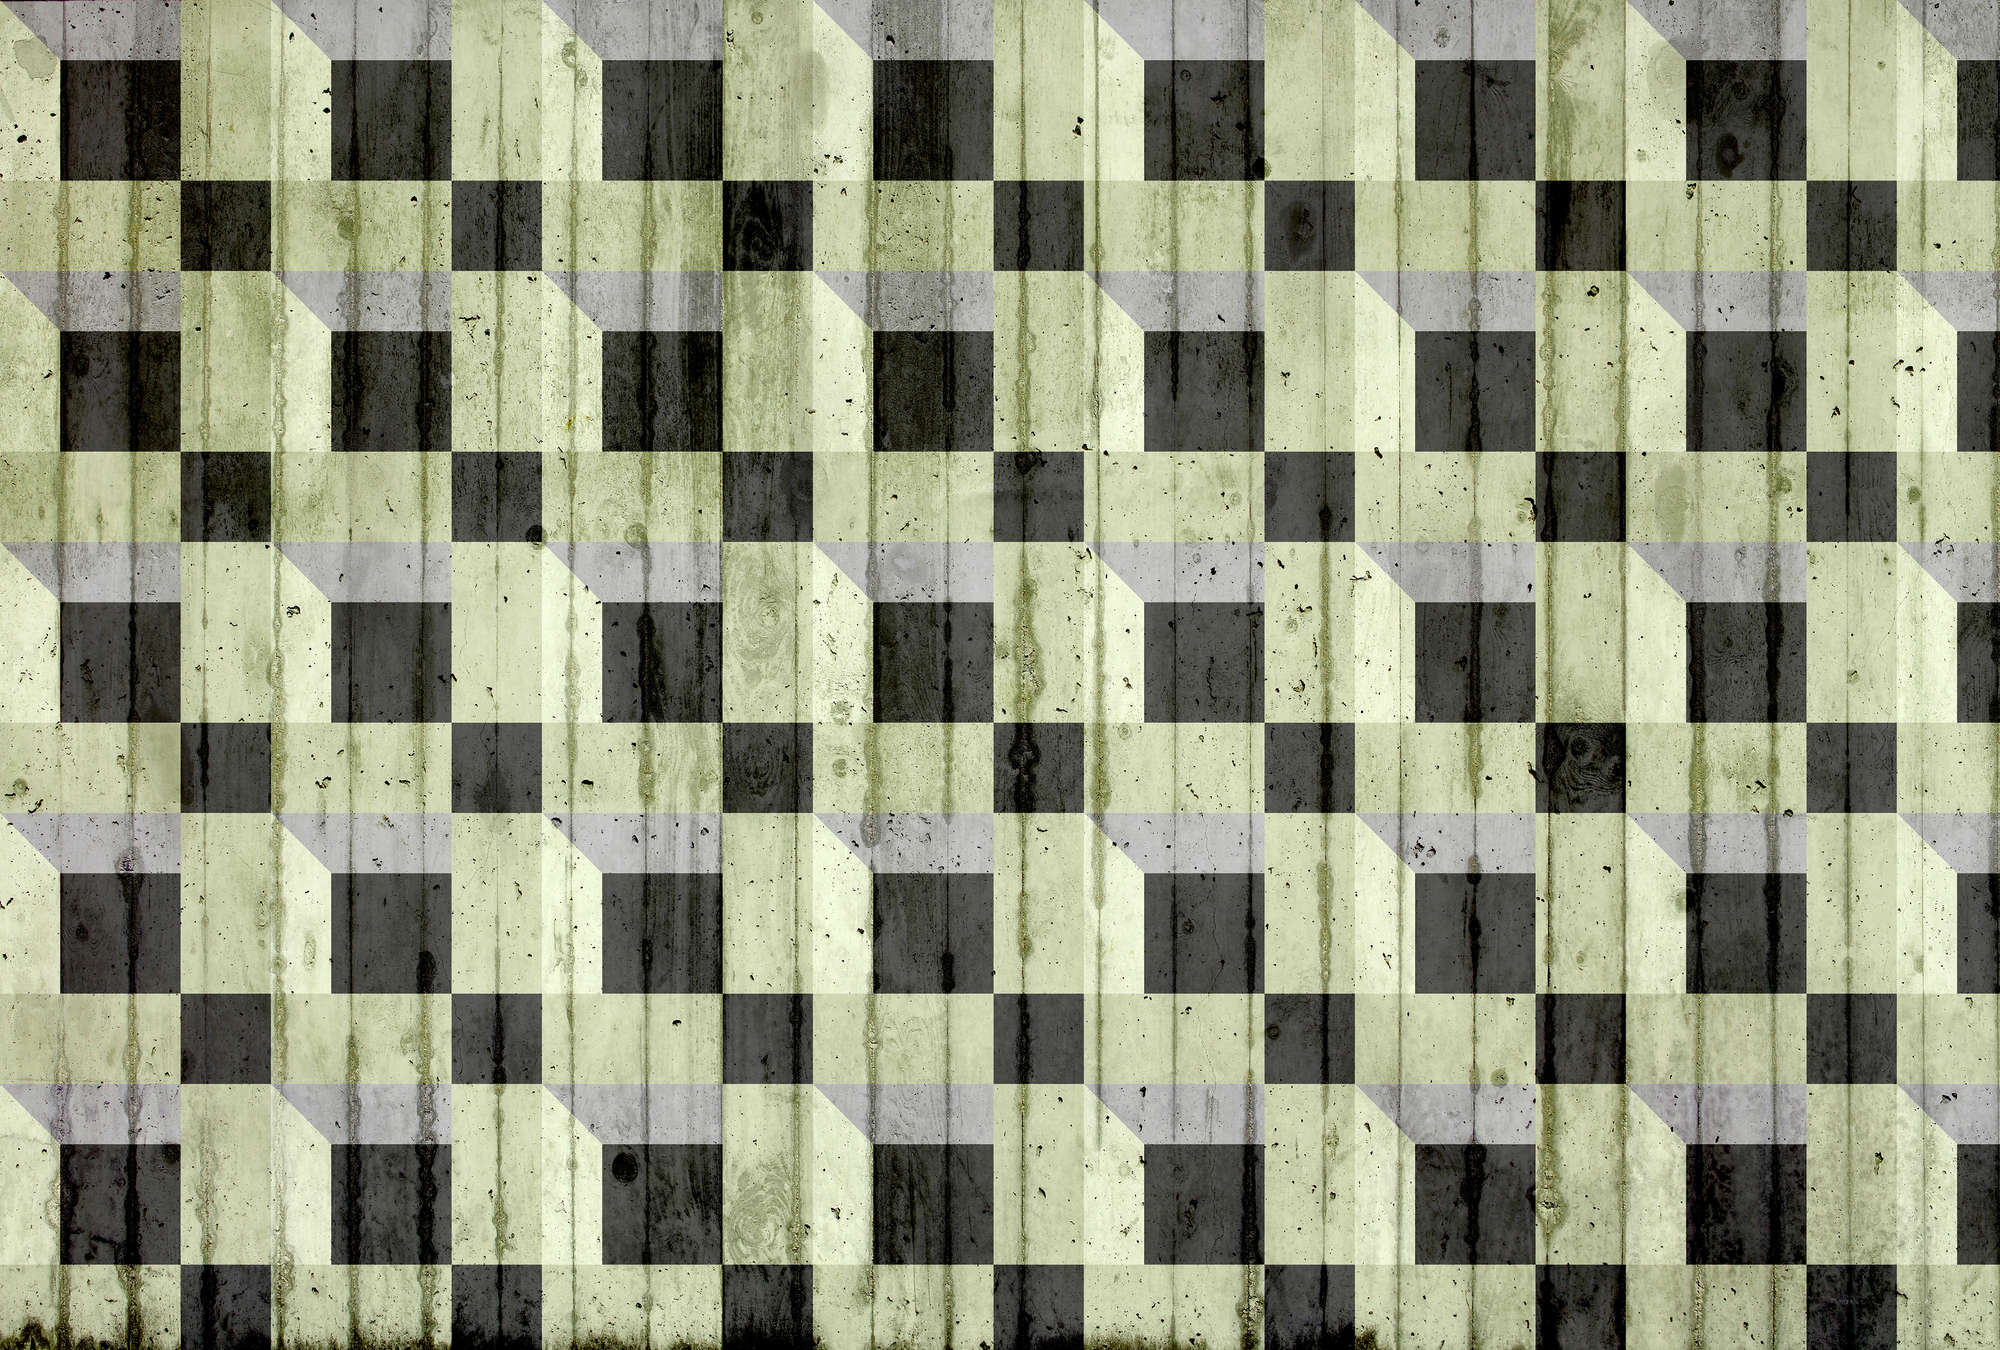             Photo wallpaper concrete look & square pattern - green, black, grey
        